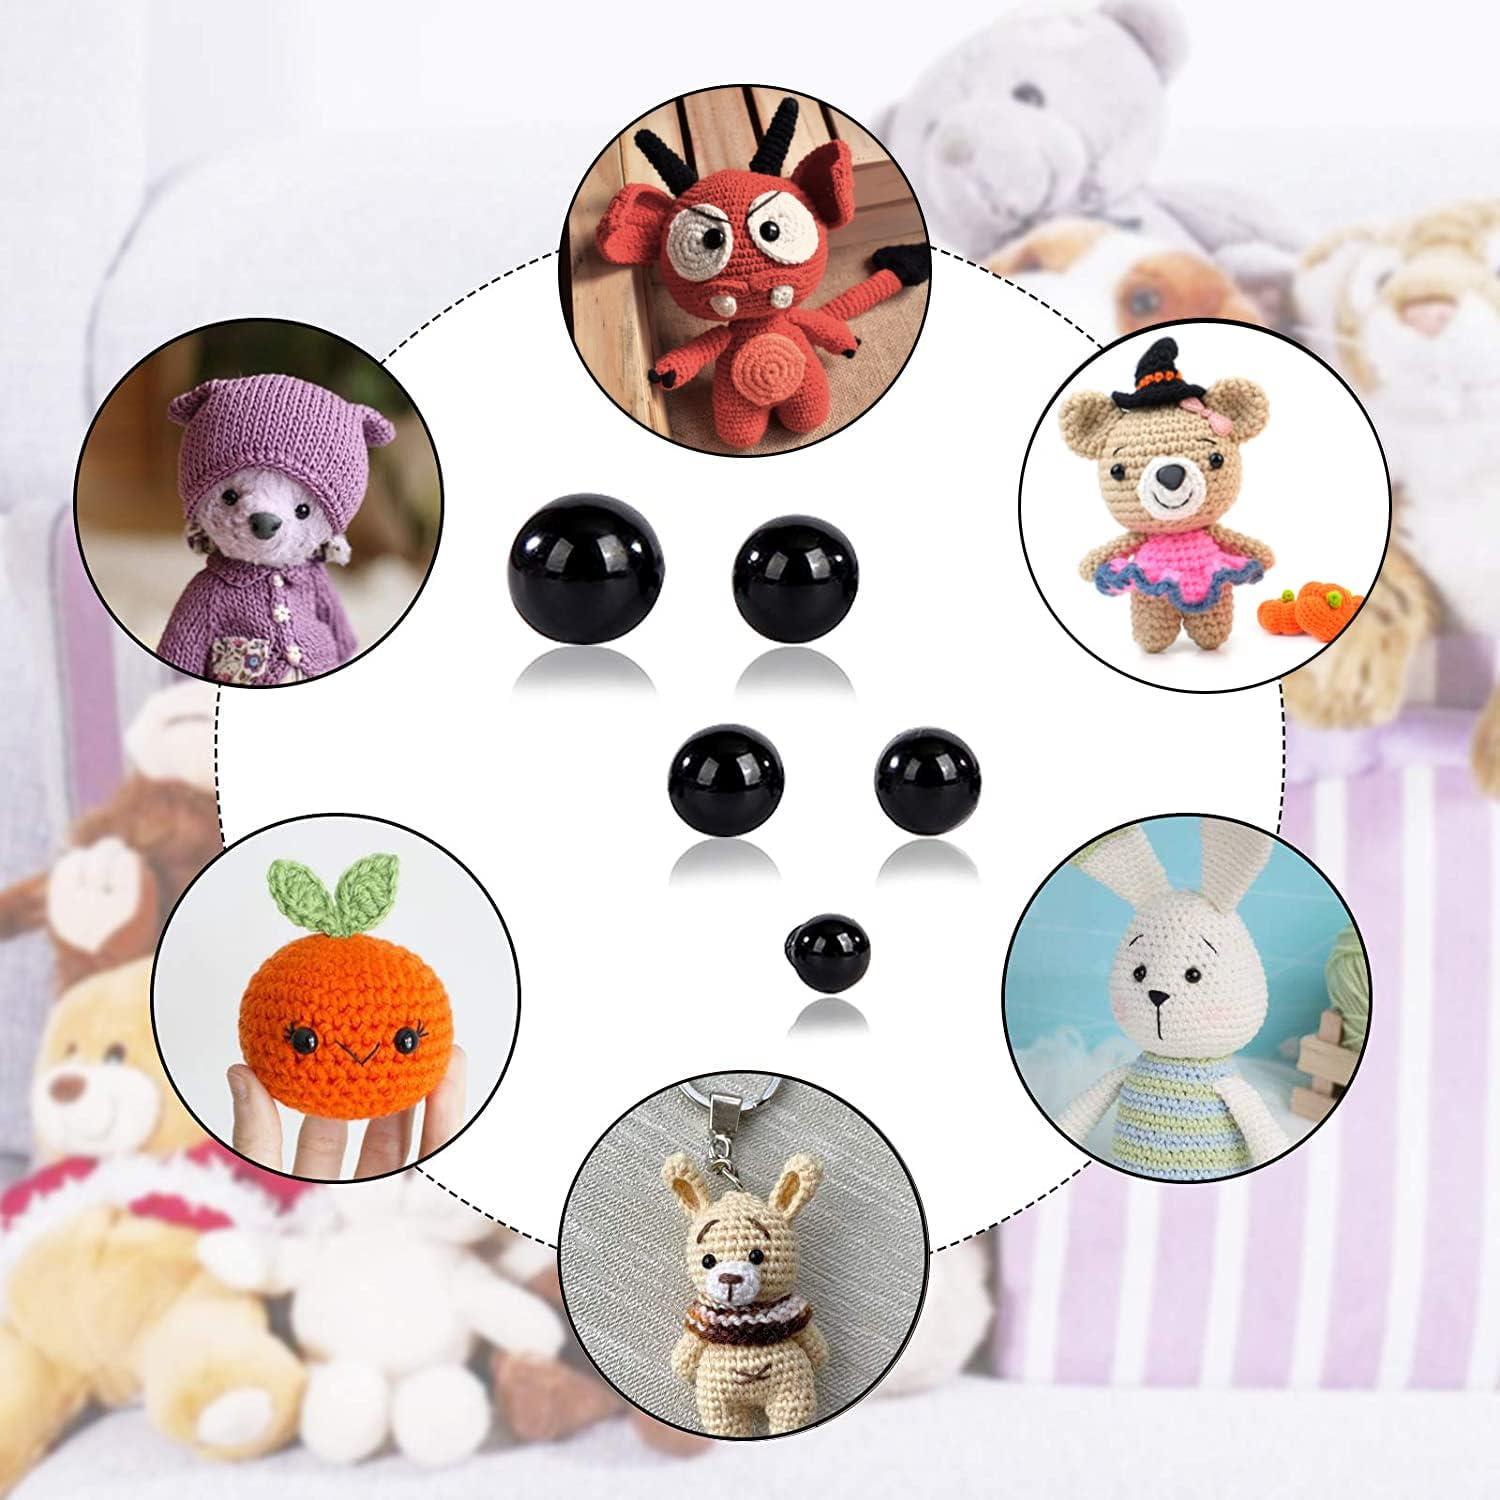  Vanblue Safety Eyes 130PCS 9mm Plastic Black Craft Eyes Teddy  Bear Eyes with Washers for Amigurumi Stuffed Animals Crochet Toys Crafts  Making